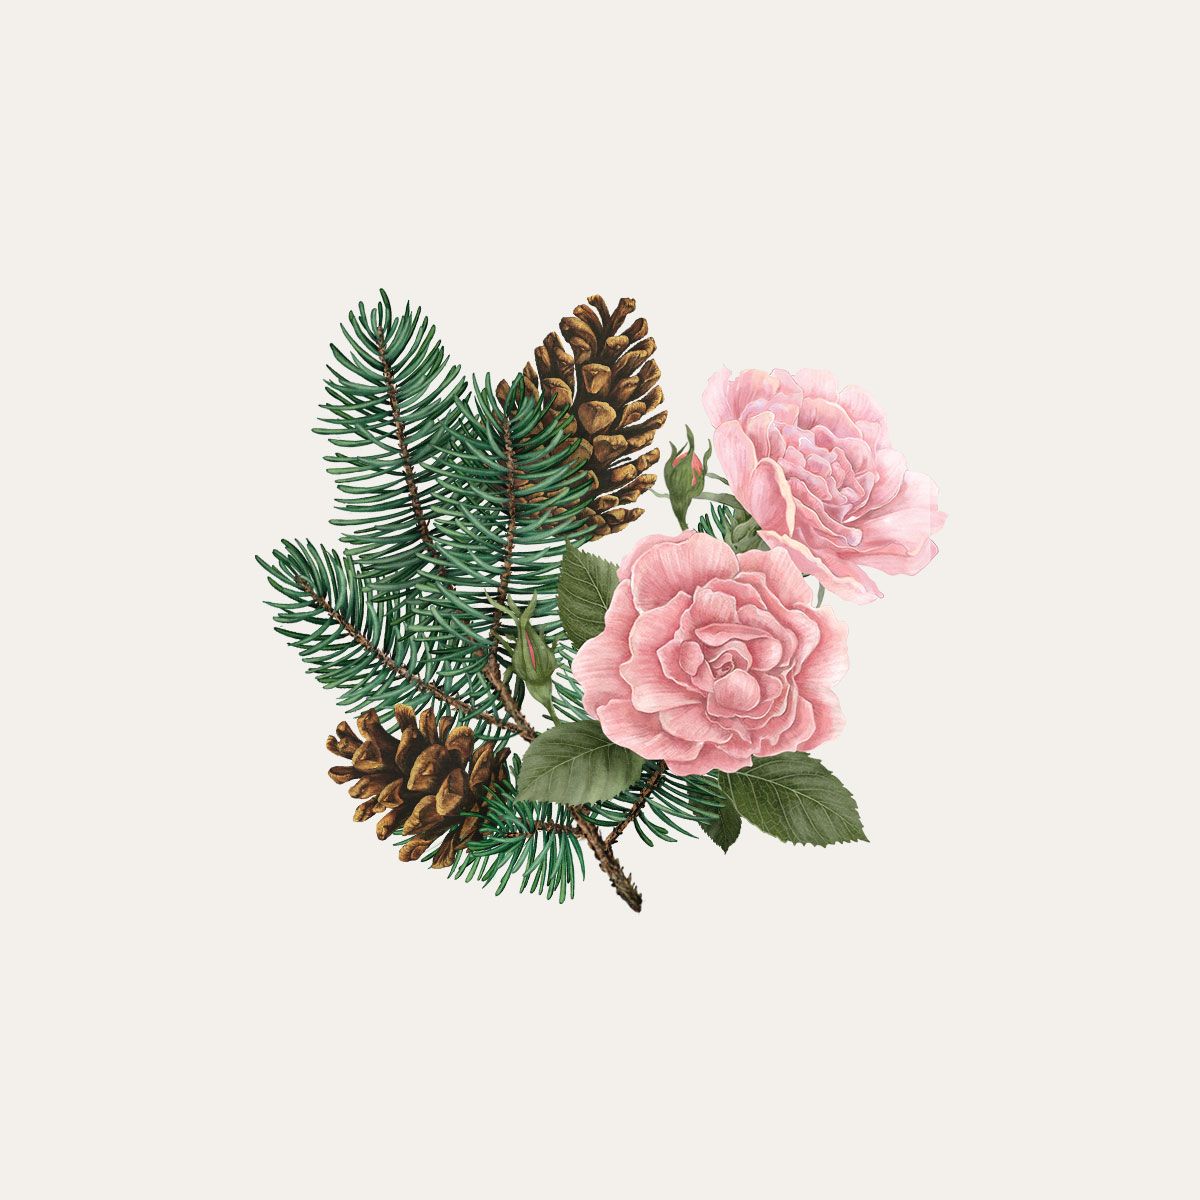 Siberian Pine & Winter Rose